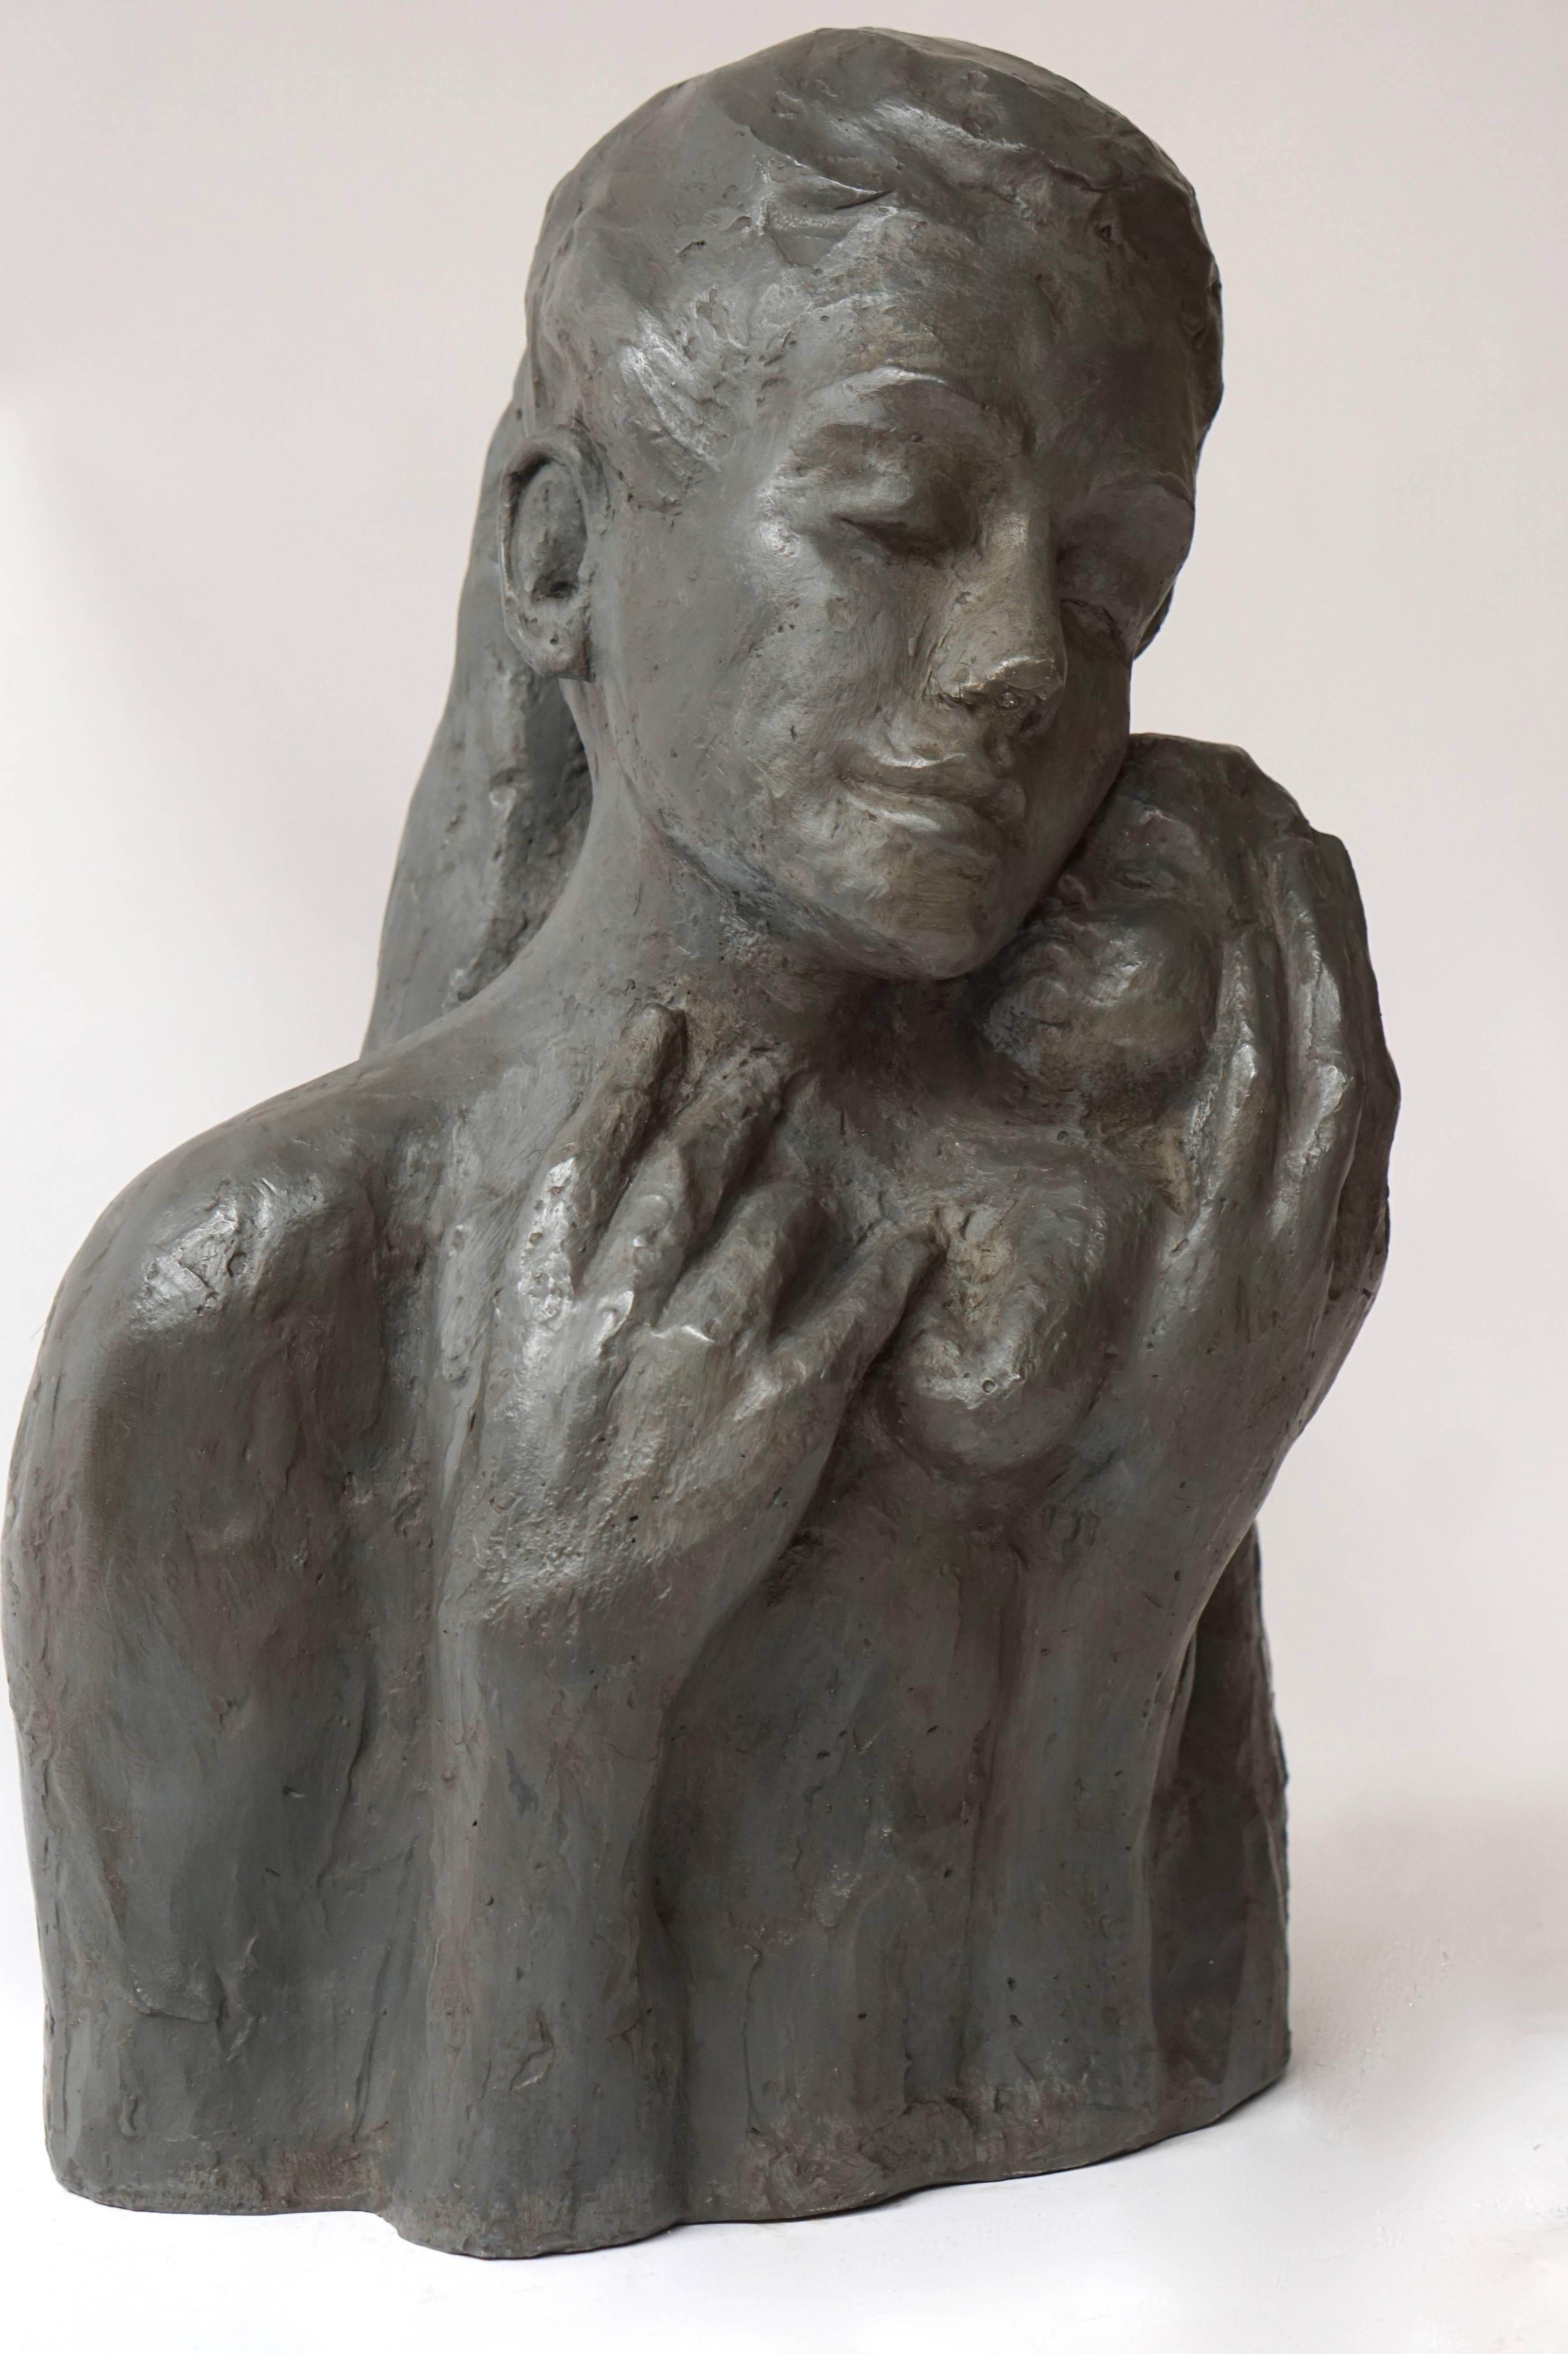 A beautiful plaster sculpture of a mother with her baby.
Signed Gilbert Belleghem.
Belgium 1960s.

Measures: Height 57 cm.
Width 38 cm.
Depth 36 cm.